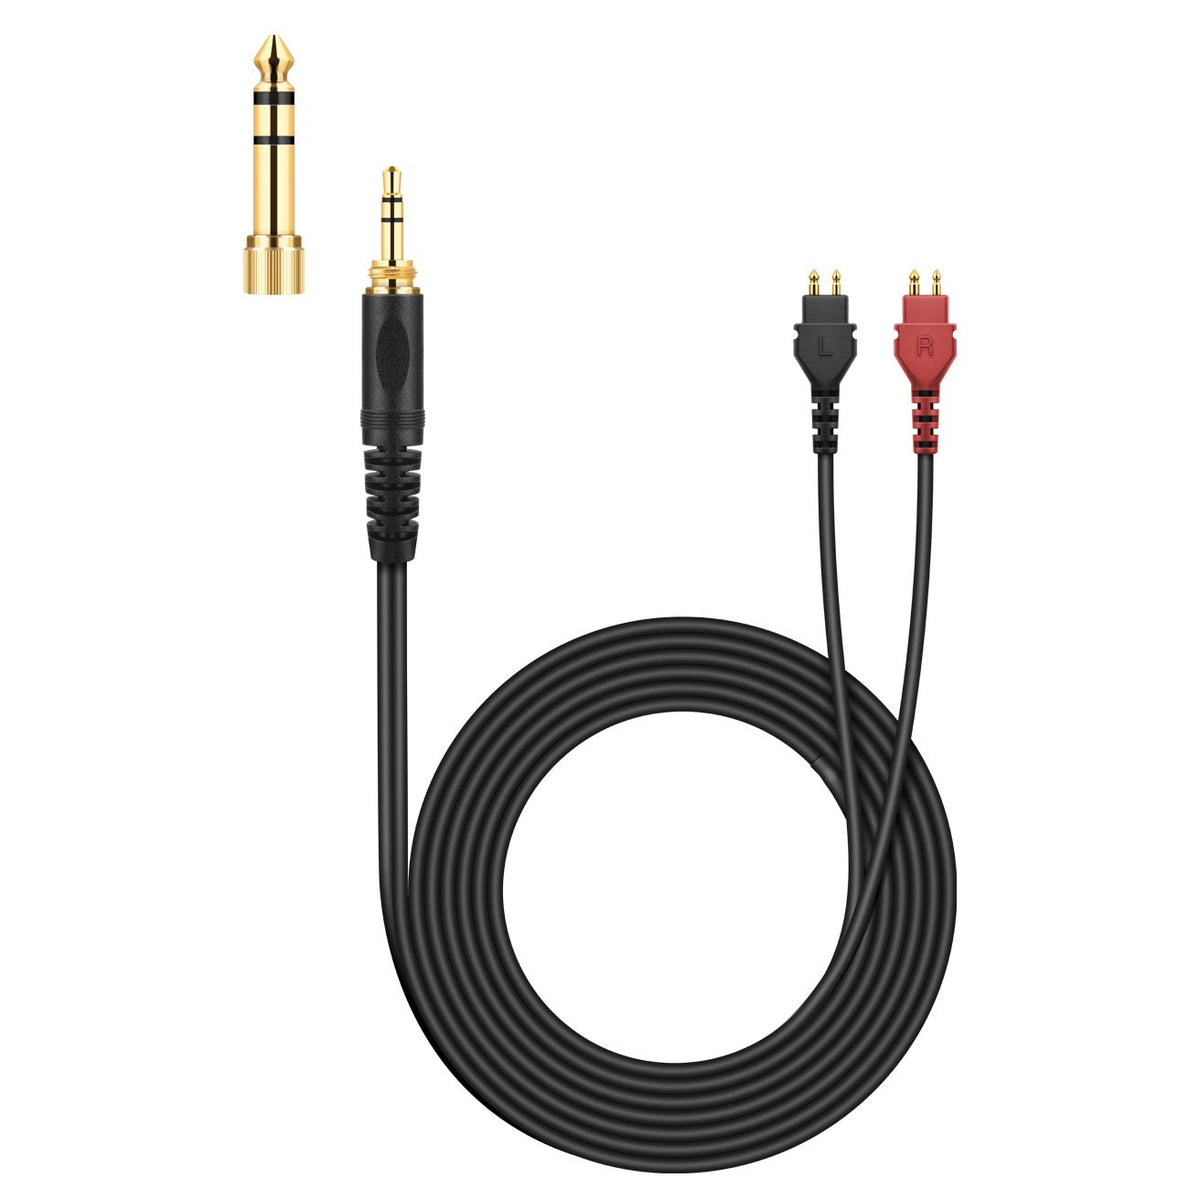 Cable de repuesto para auriculares Sennheiser PXC450 PXC350 PC350 HD380 PRO  de 9.8 ft